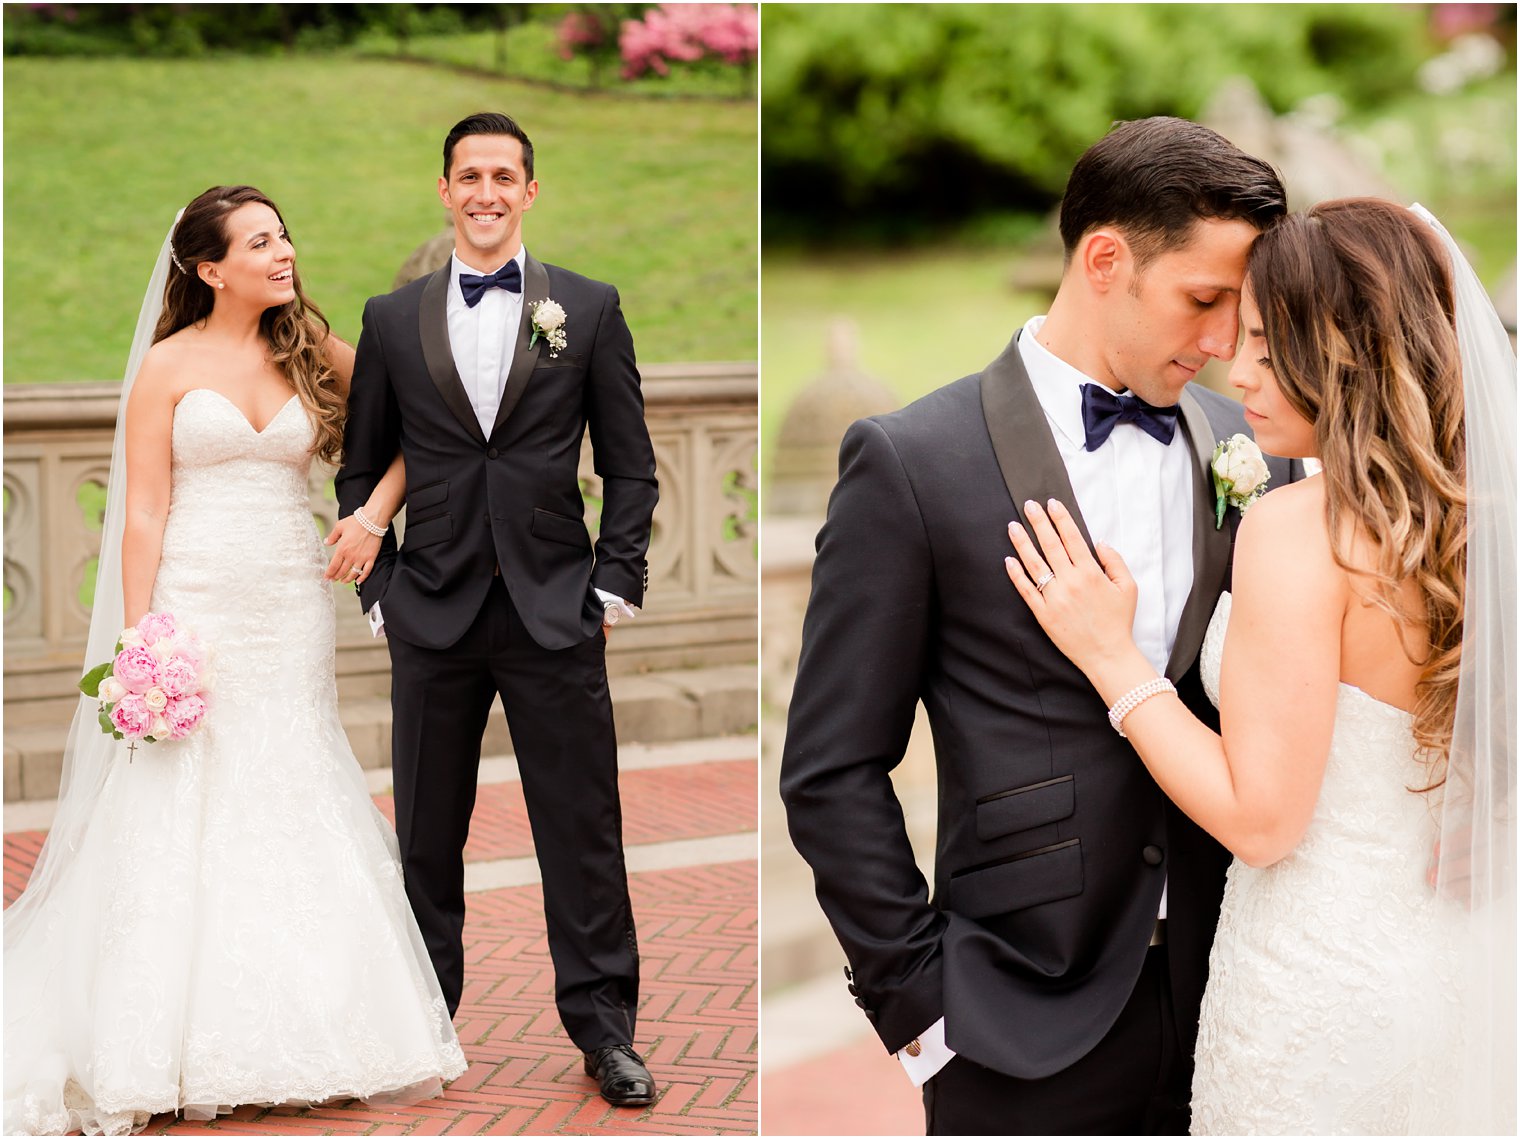 Central park bride and groom photos | Photo by Idalia Photography